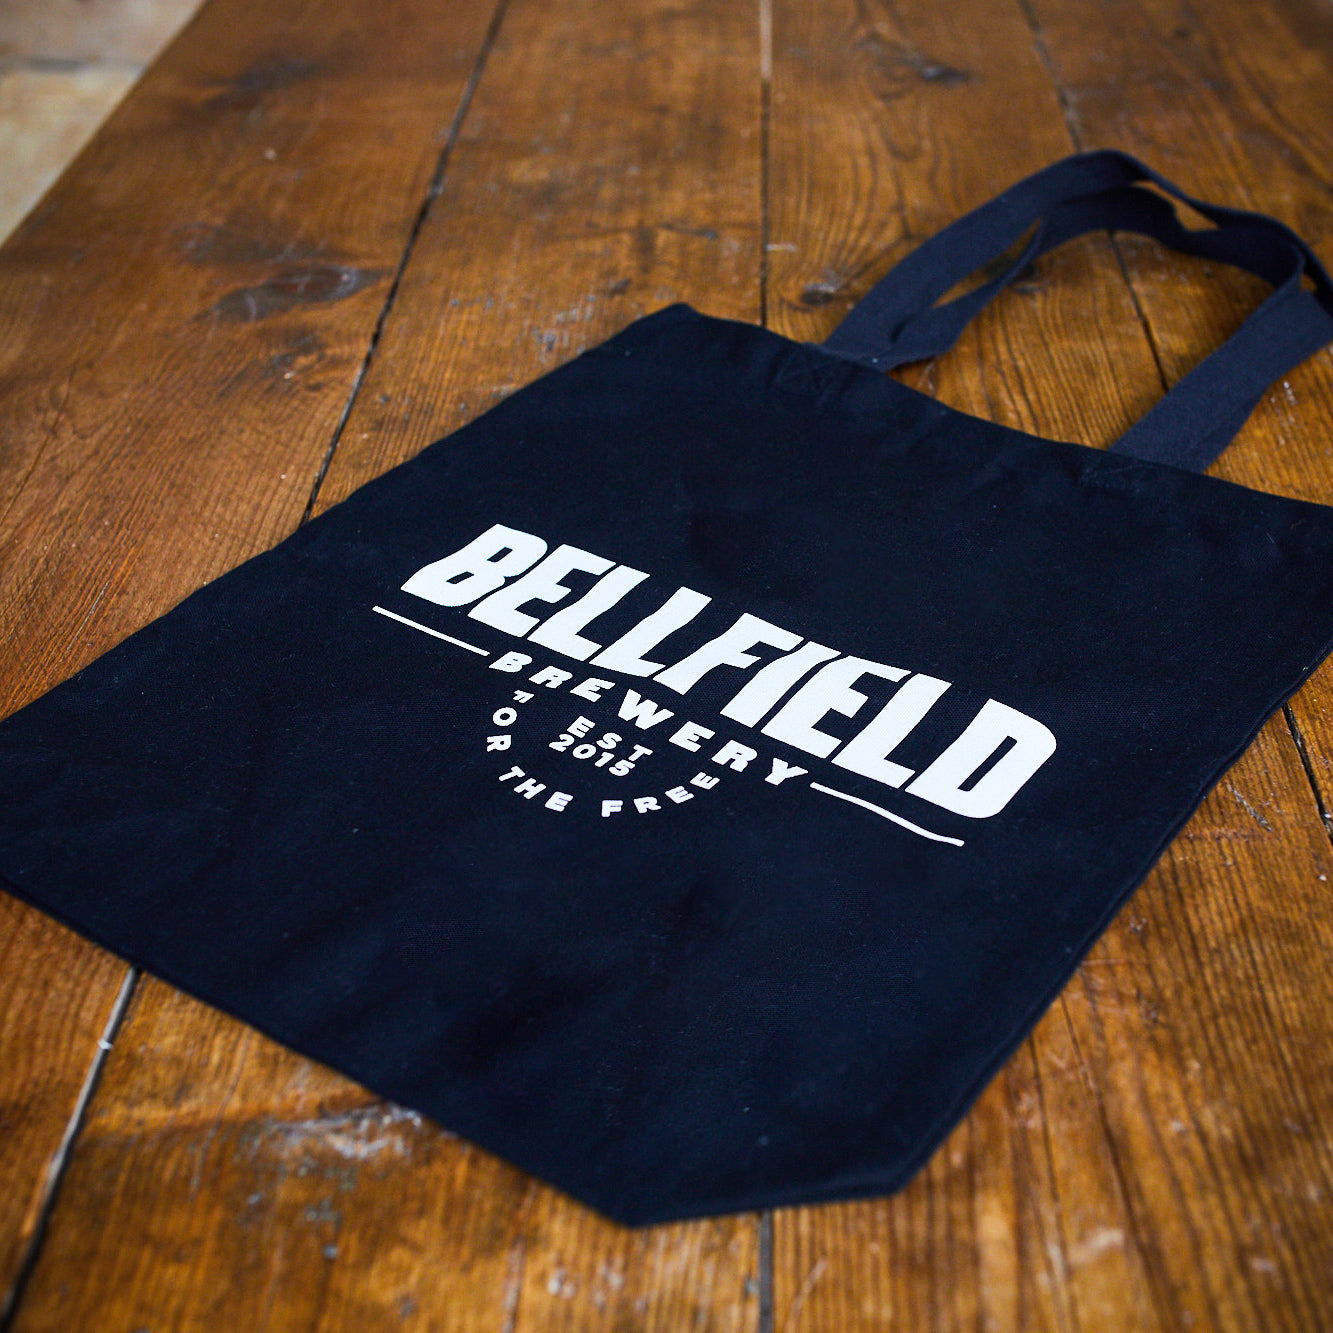 Bellfield branded cloth tote bag.